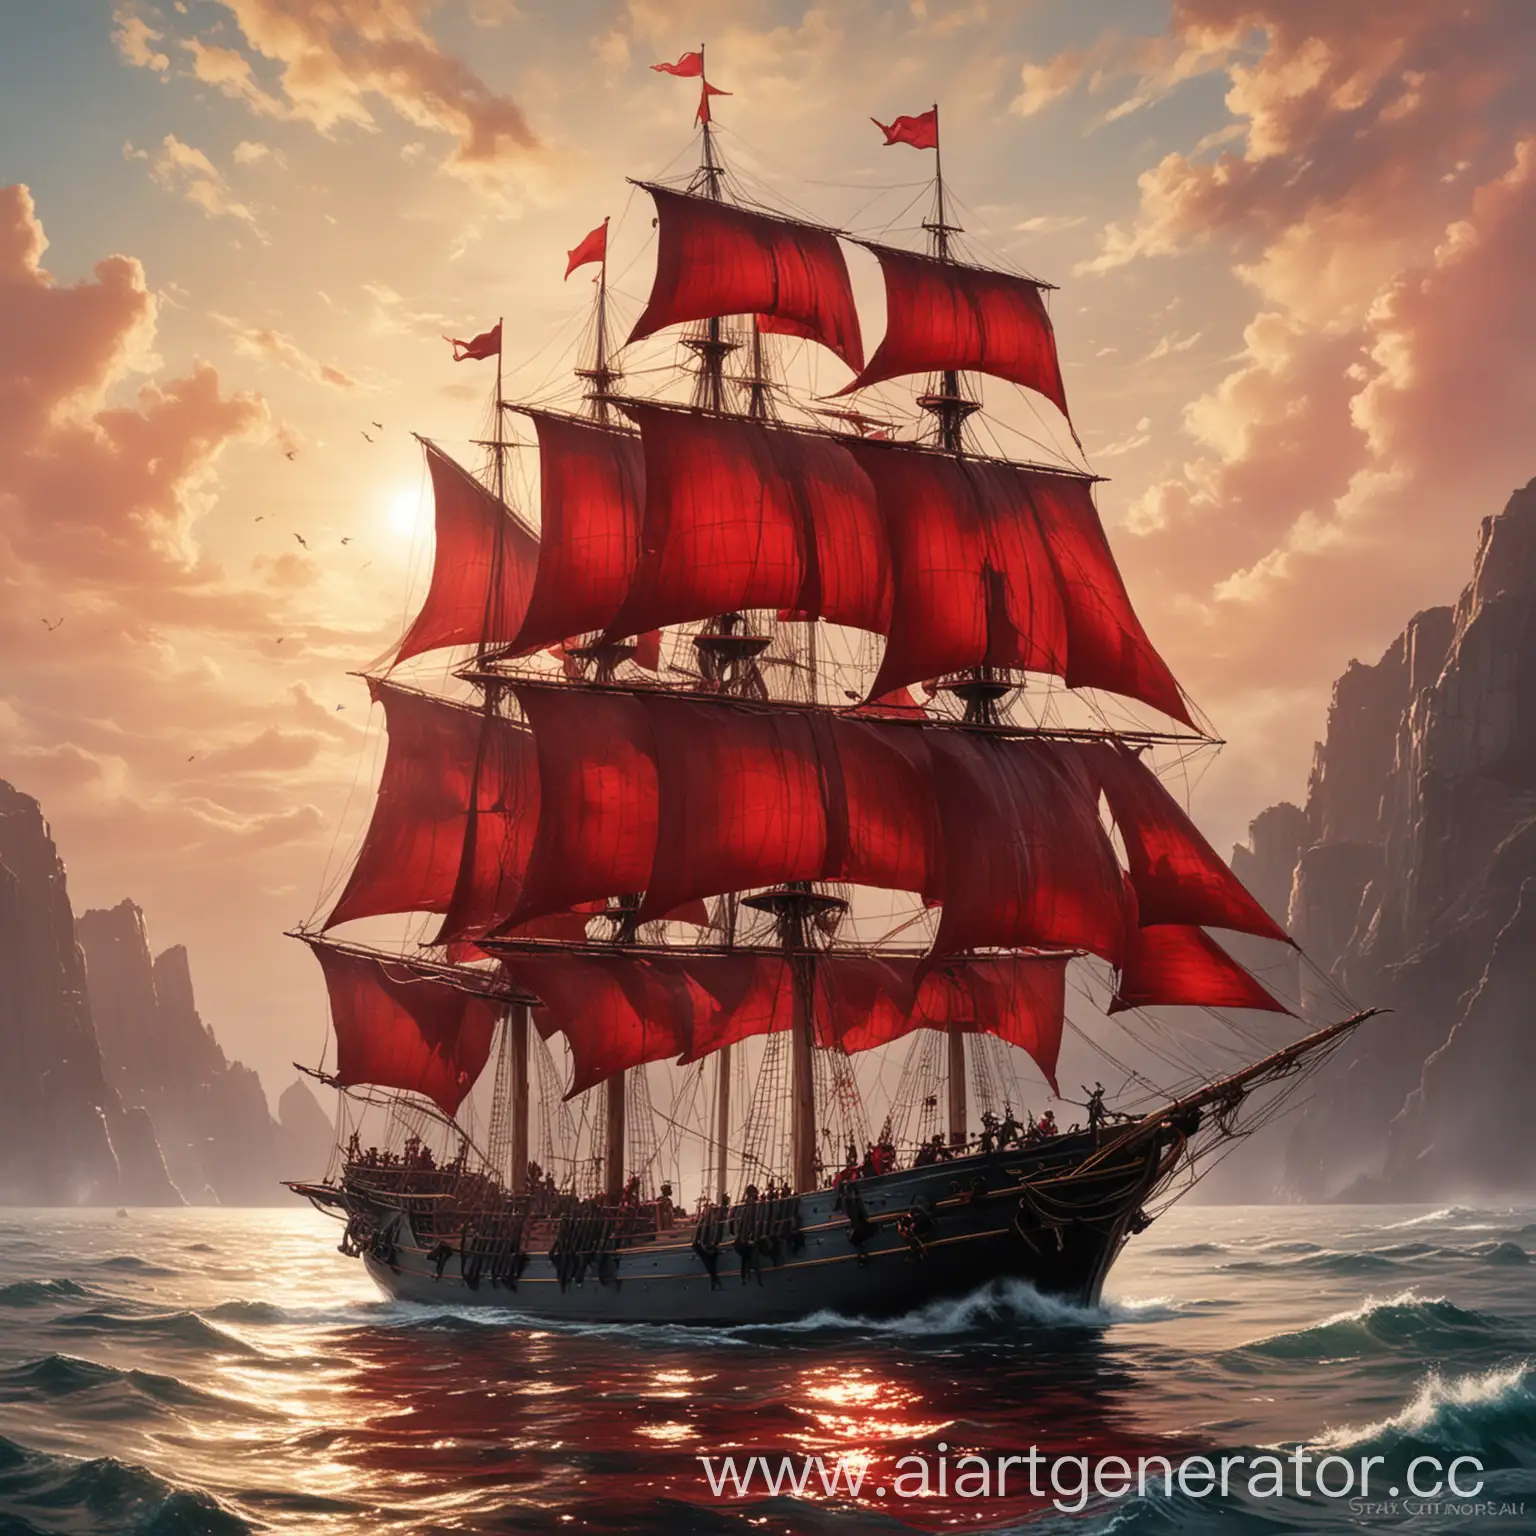 Vibrant-Scarlet-Sails-Illuminating-Twilight-Seascape